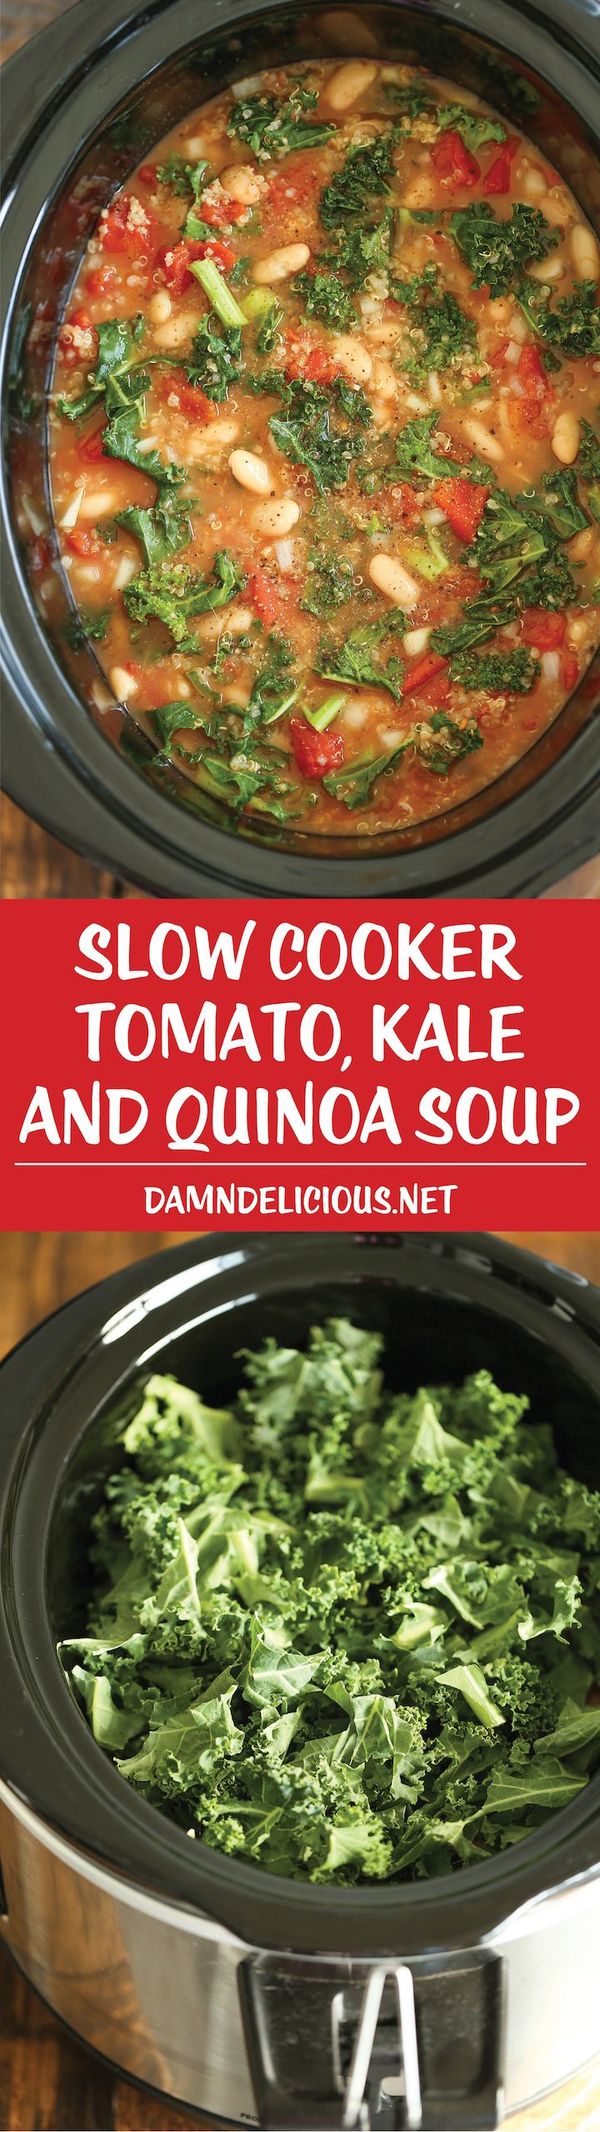 Slow Cooker Tomato, Kale and Quinoa Soup